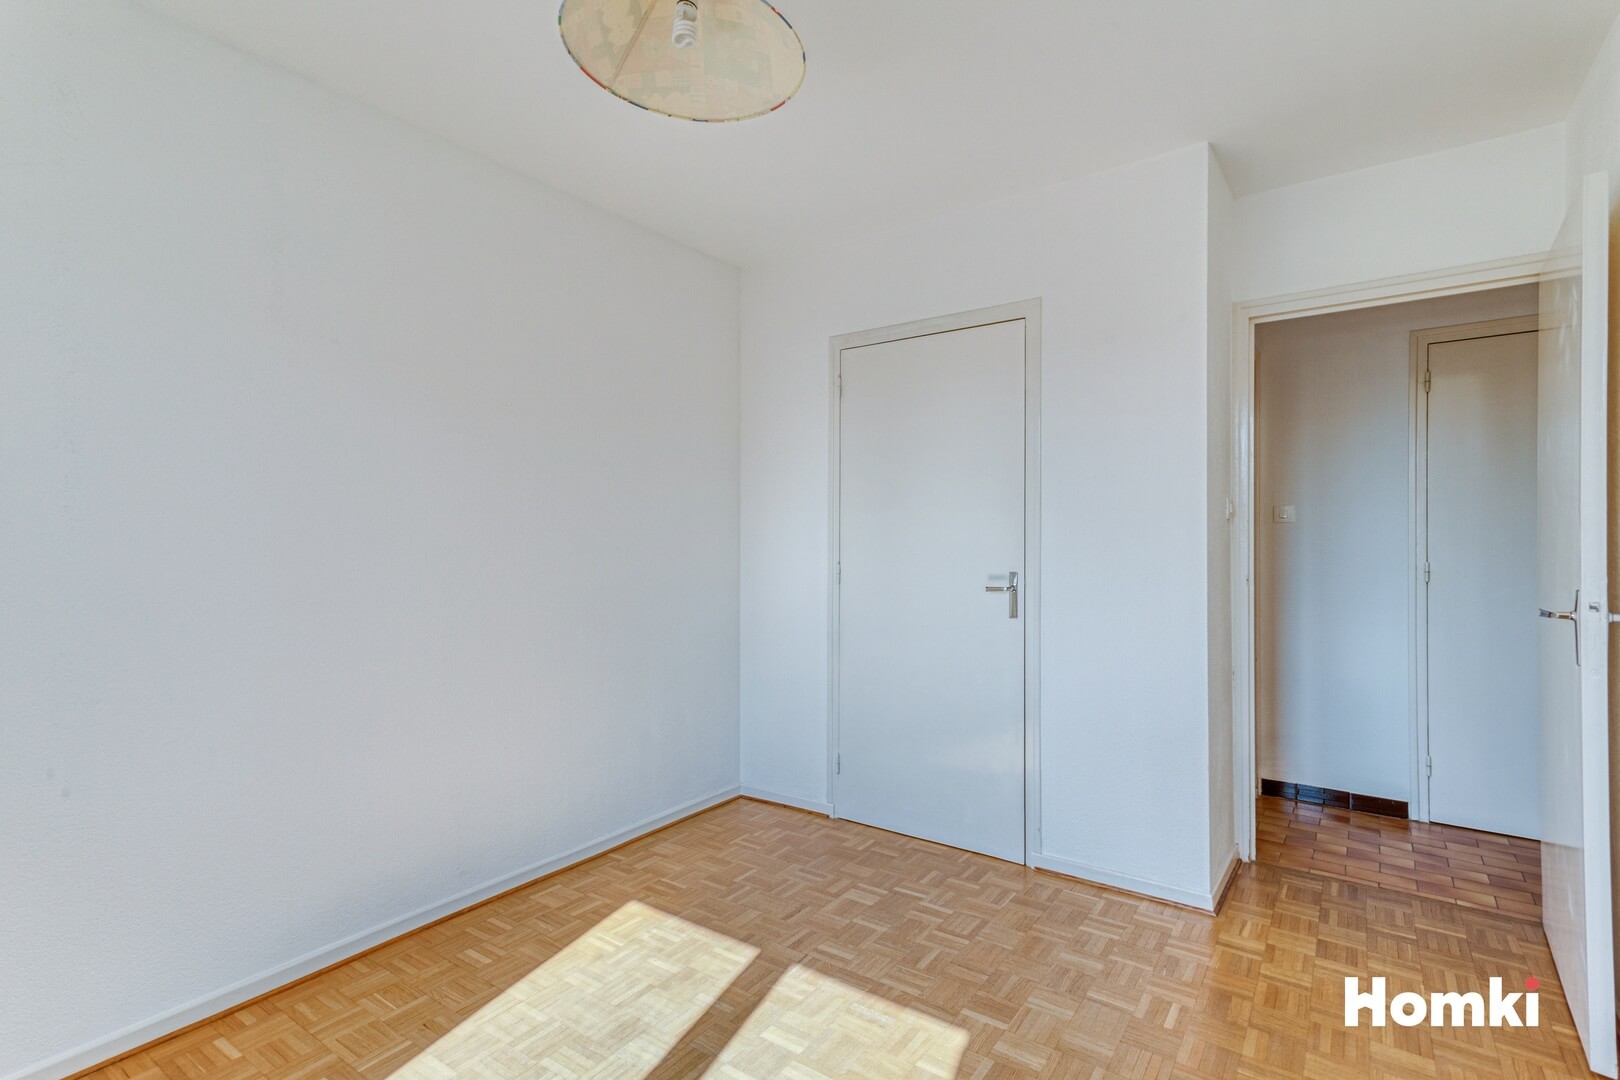 Homki - Vente Appartement  de 56.0 m² à Meyzieu 69330